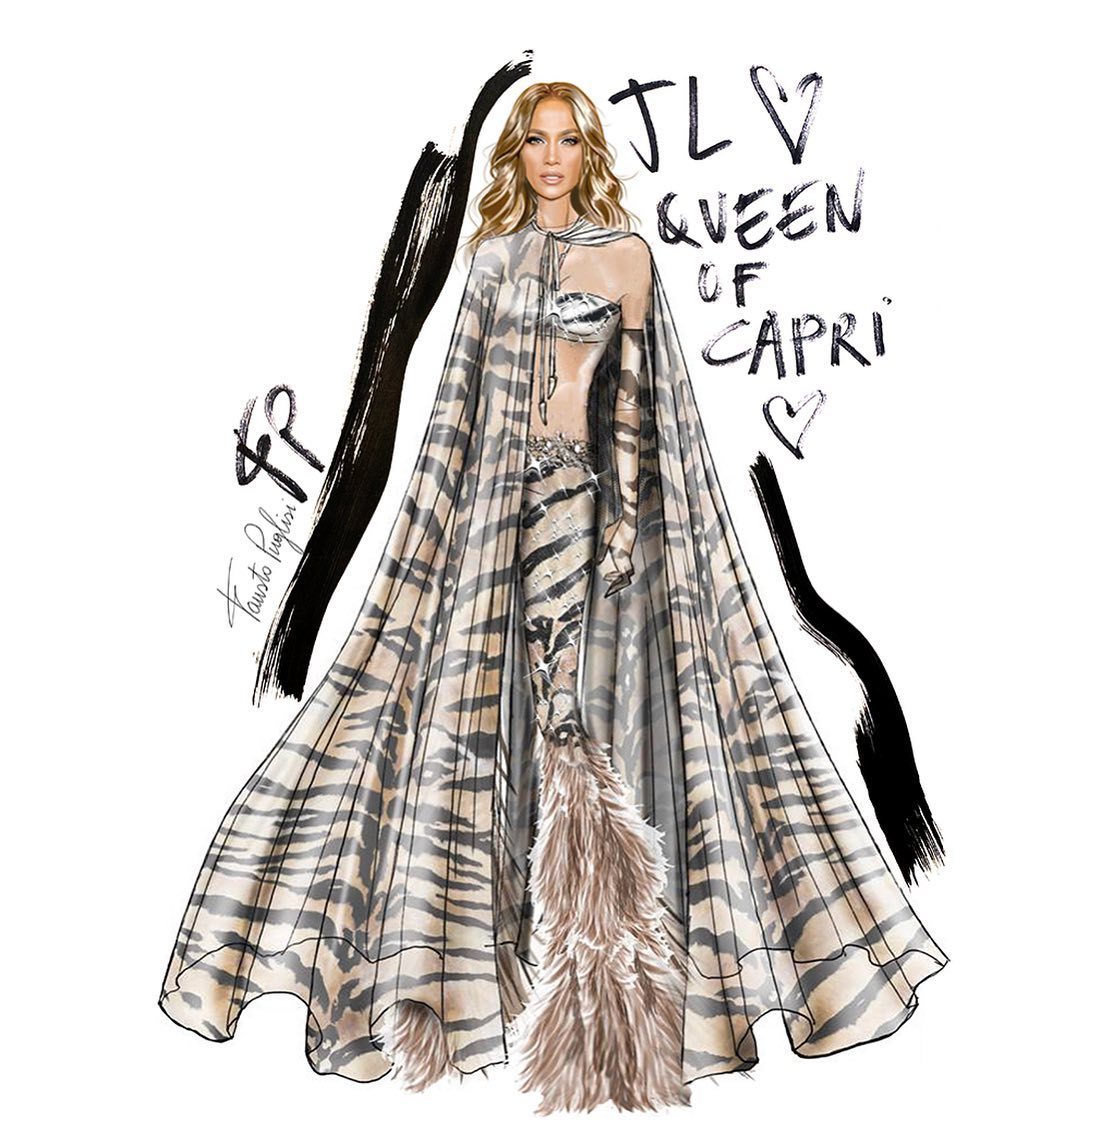 Boceto del diseño que lució Jennifer Lopez en Capri.